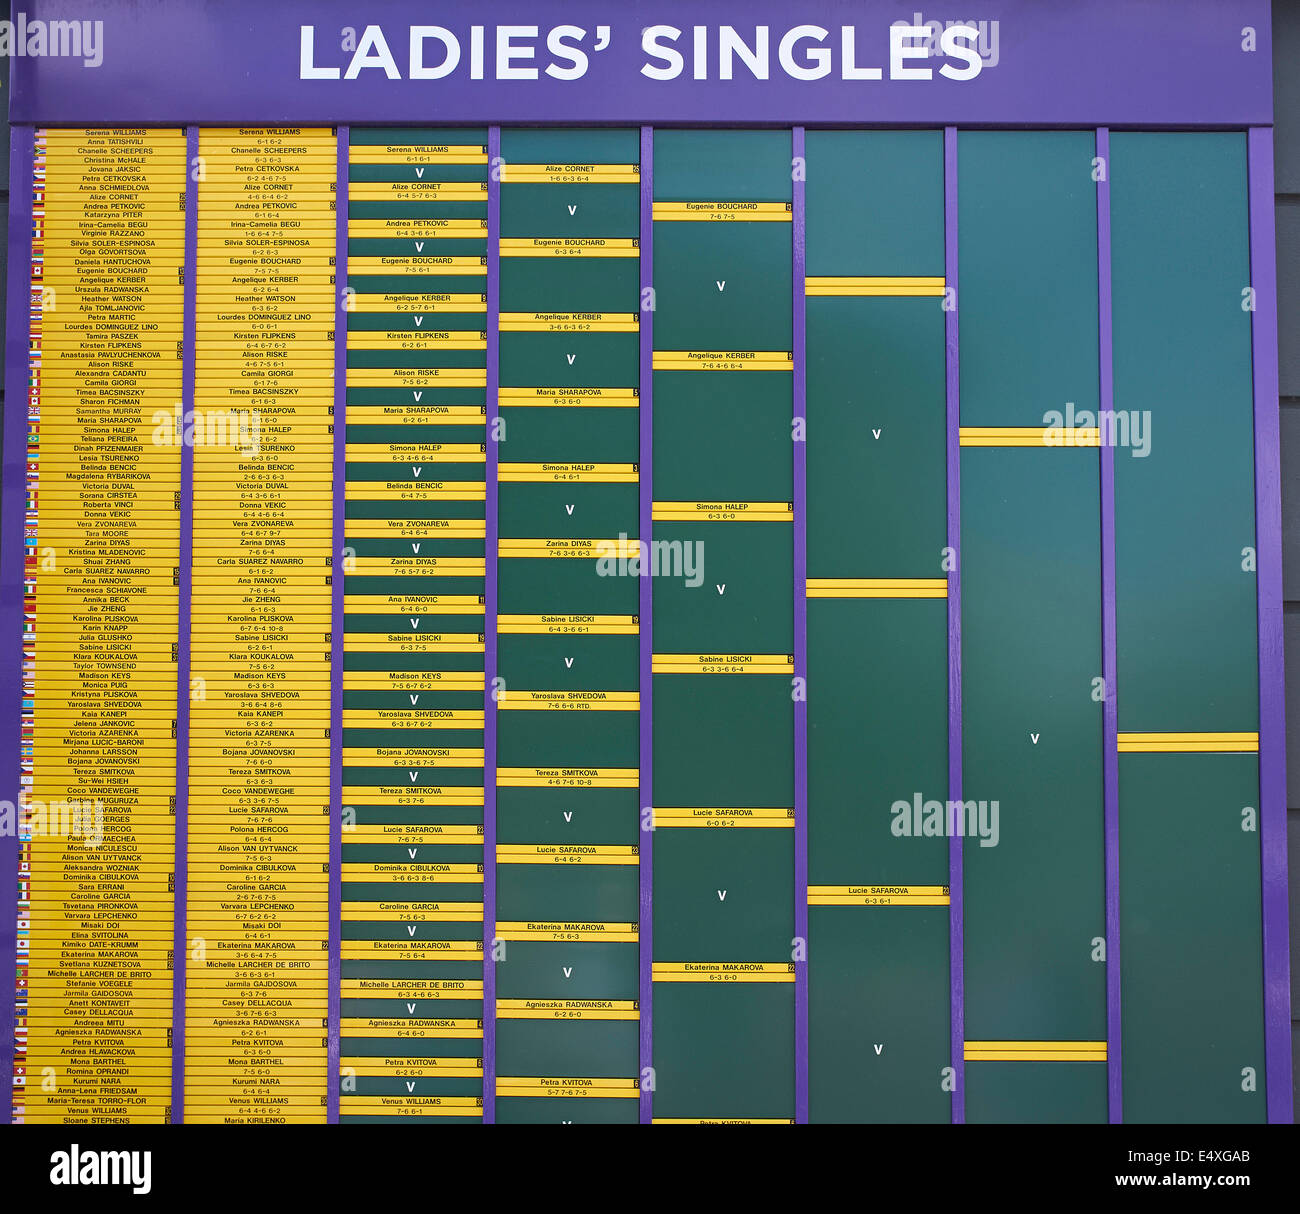 Wimbledon Tennis Championship 2014, Ladies Singles board Stock Photo